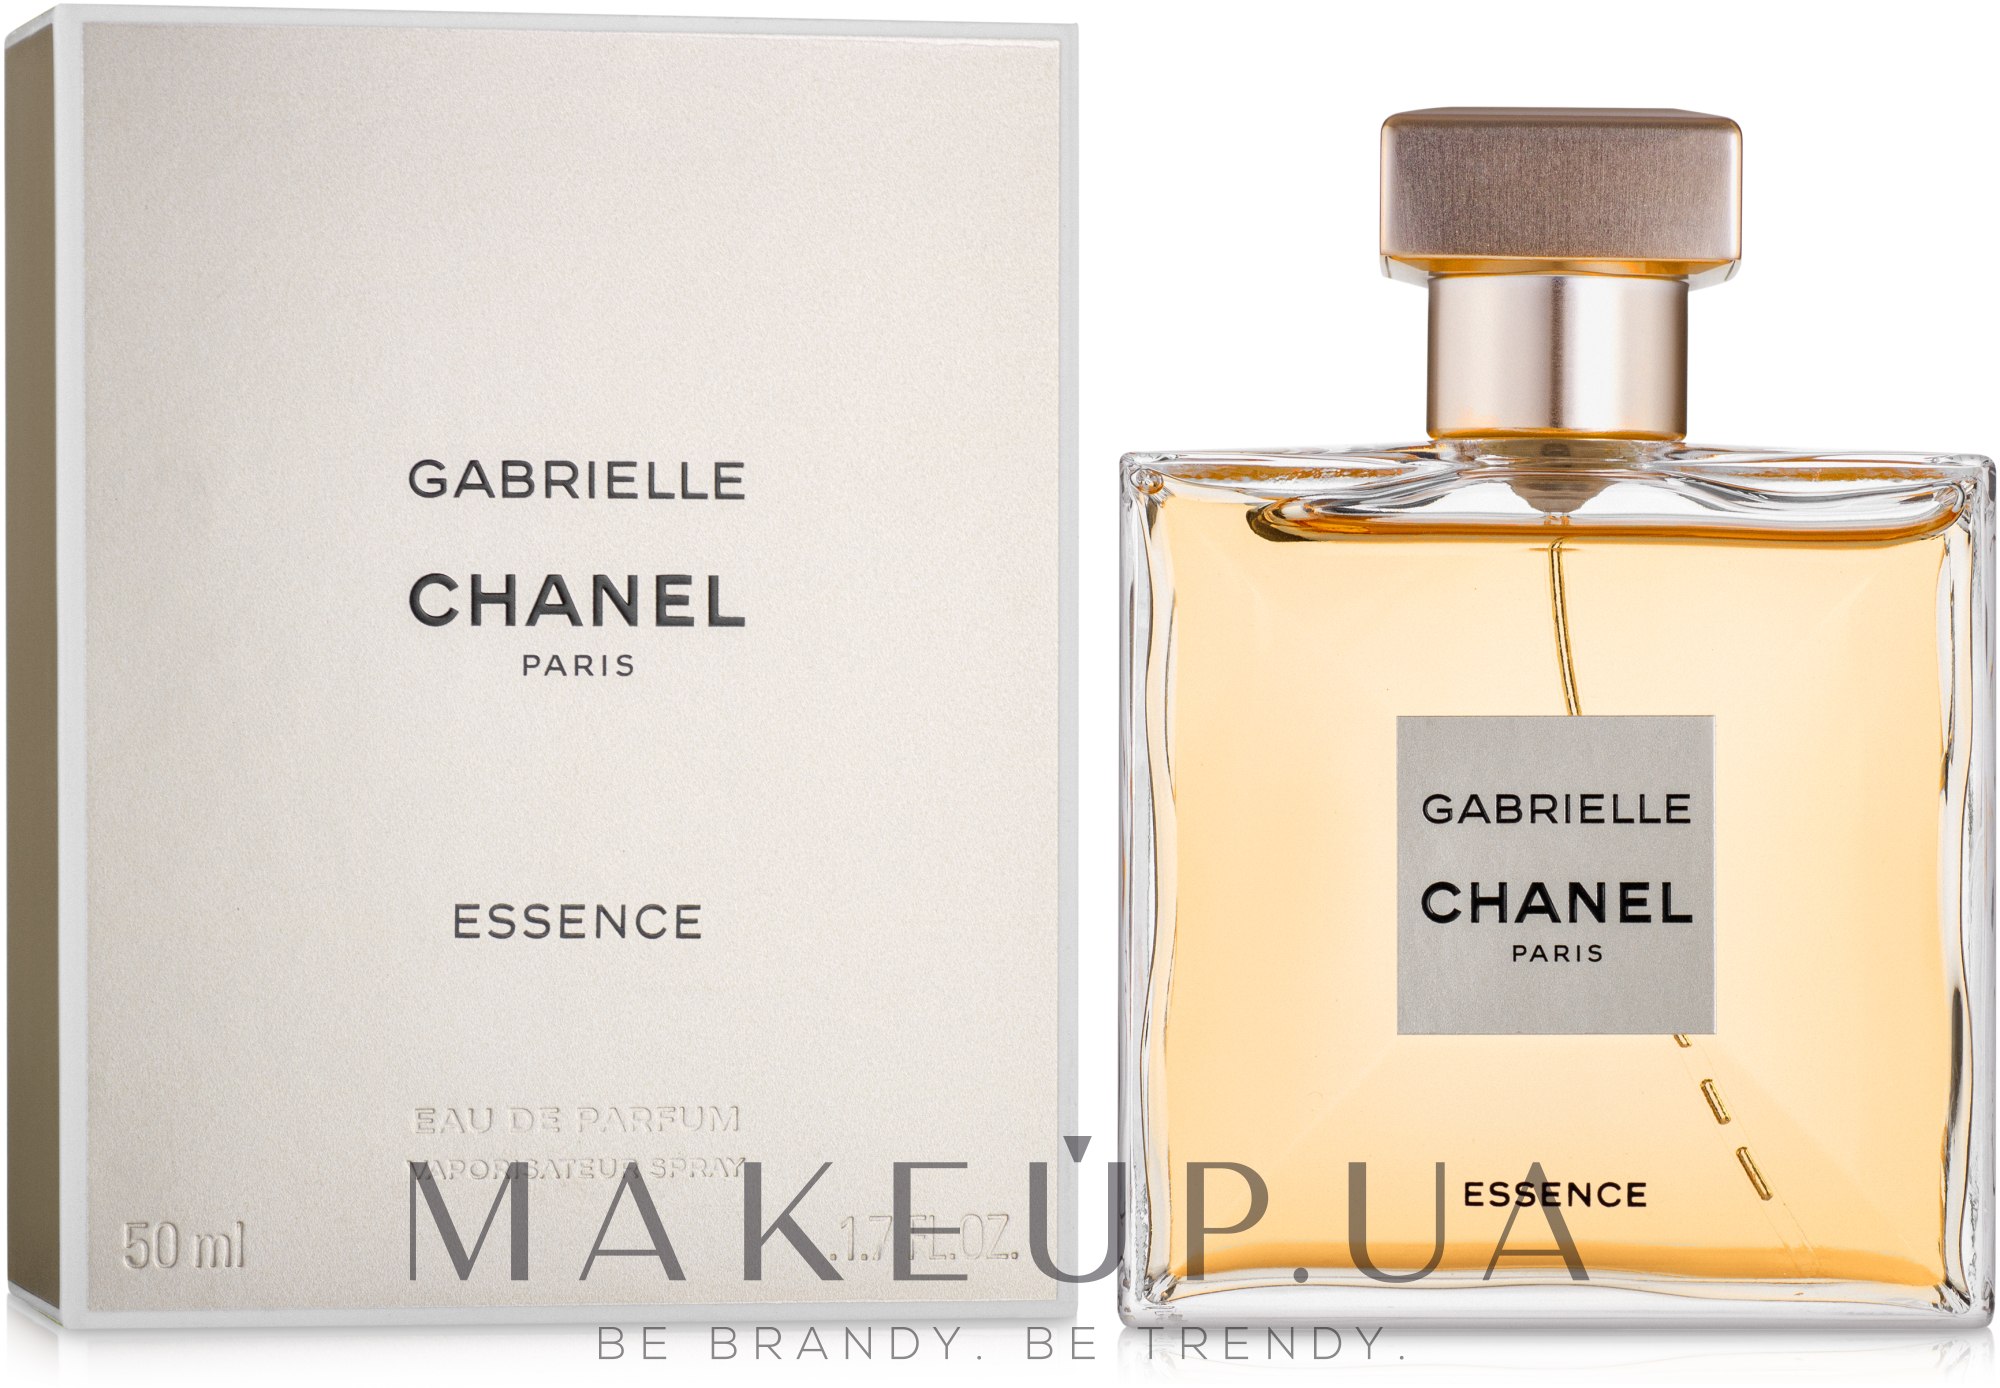 Chanel GabrielleШанель Габриэль 100 мл Парфюм для женщин и мужчин  136686843 купить за 639  в интернетмагазине Wildberries